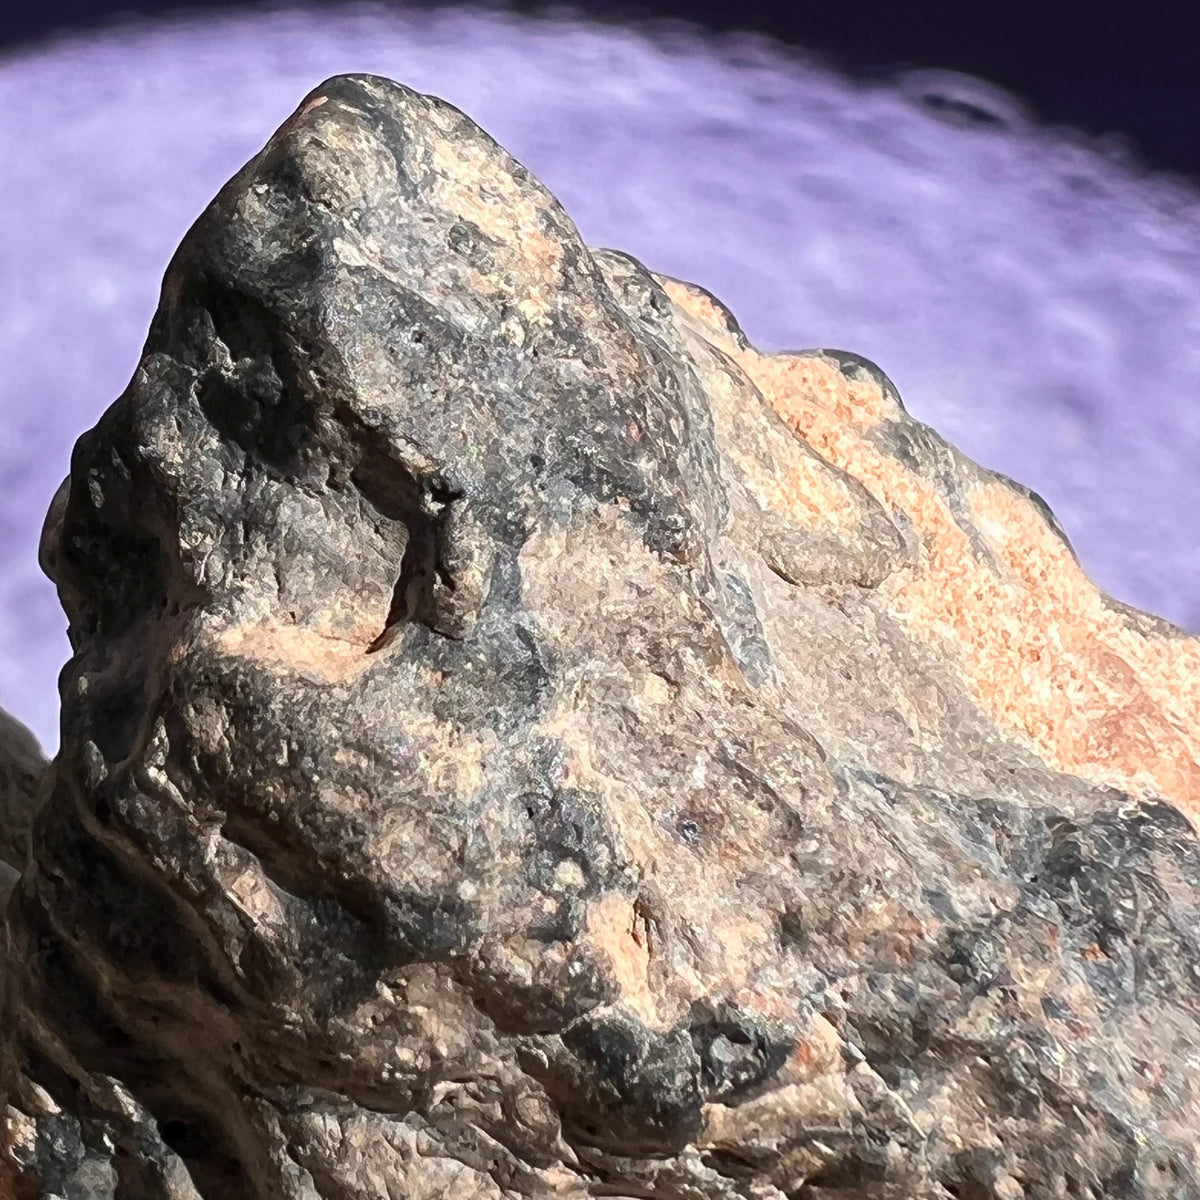 NWA 13974 Lunar Meteorite 61.1 grams #111-Moldavite Life